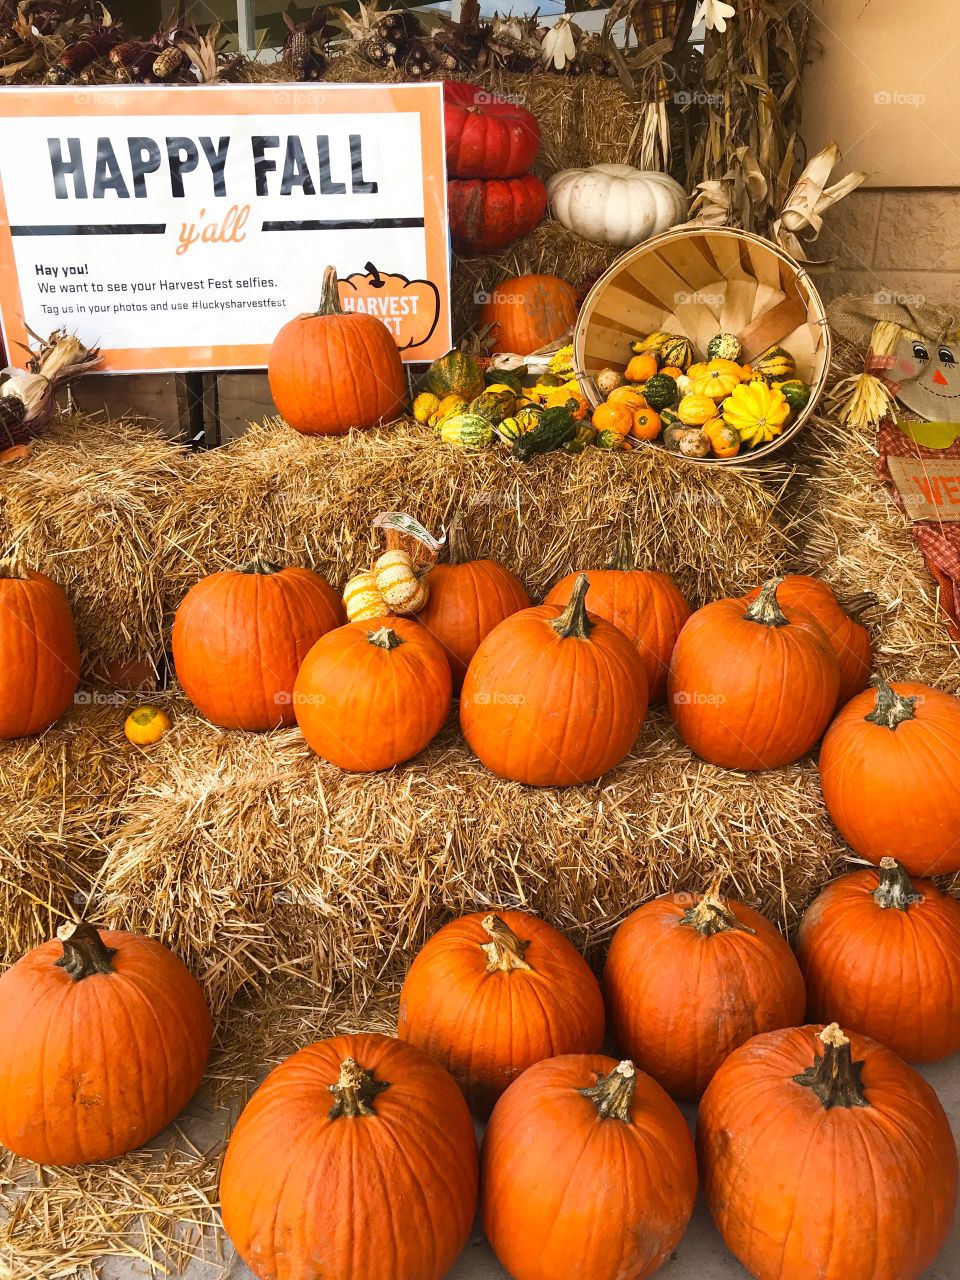 Happy fall ya’ll pumpkin patch